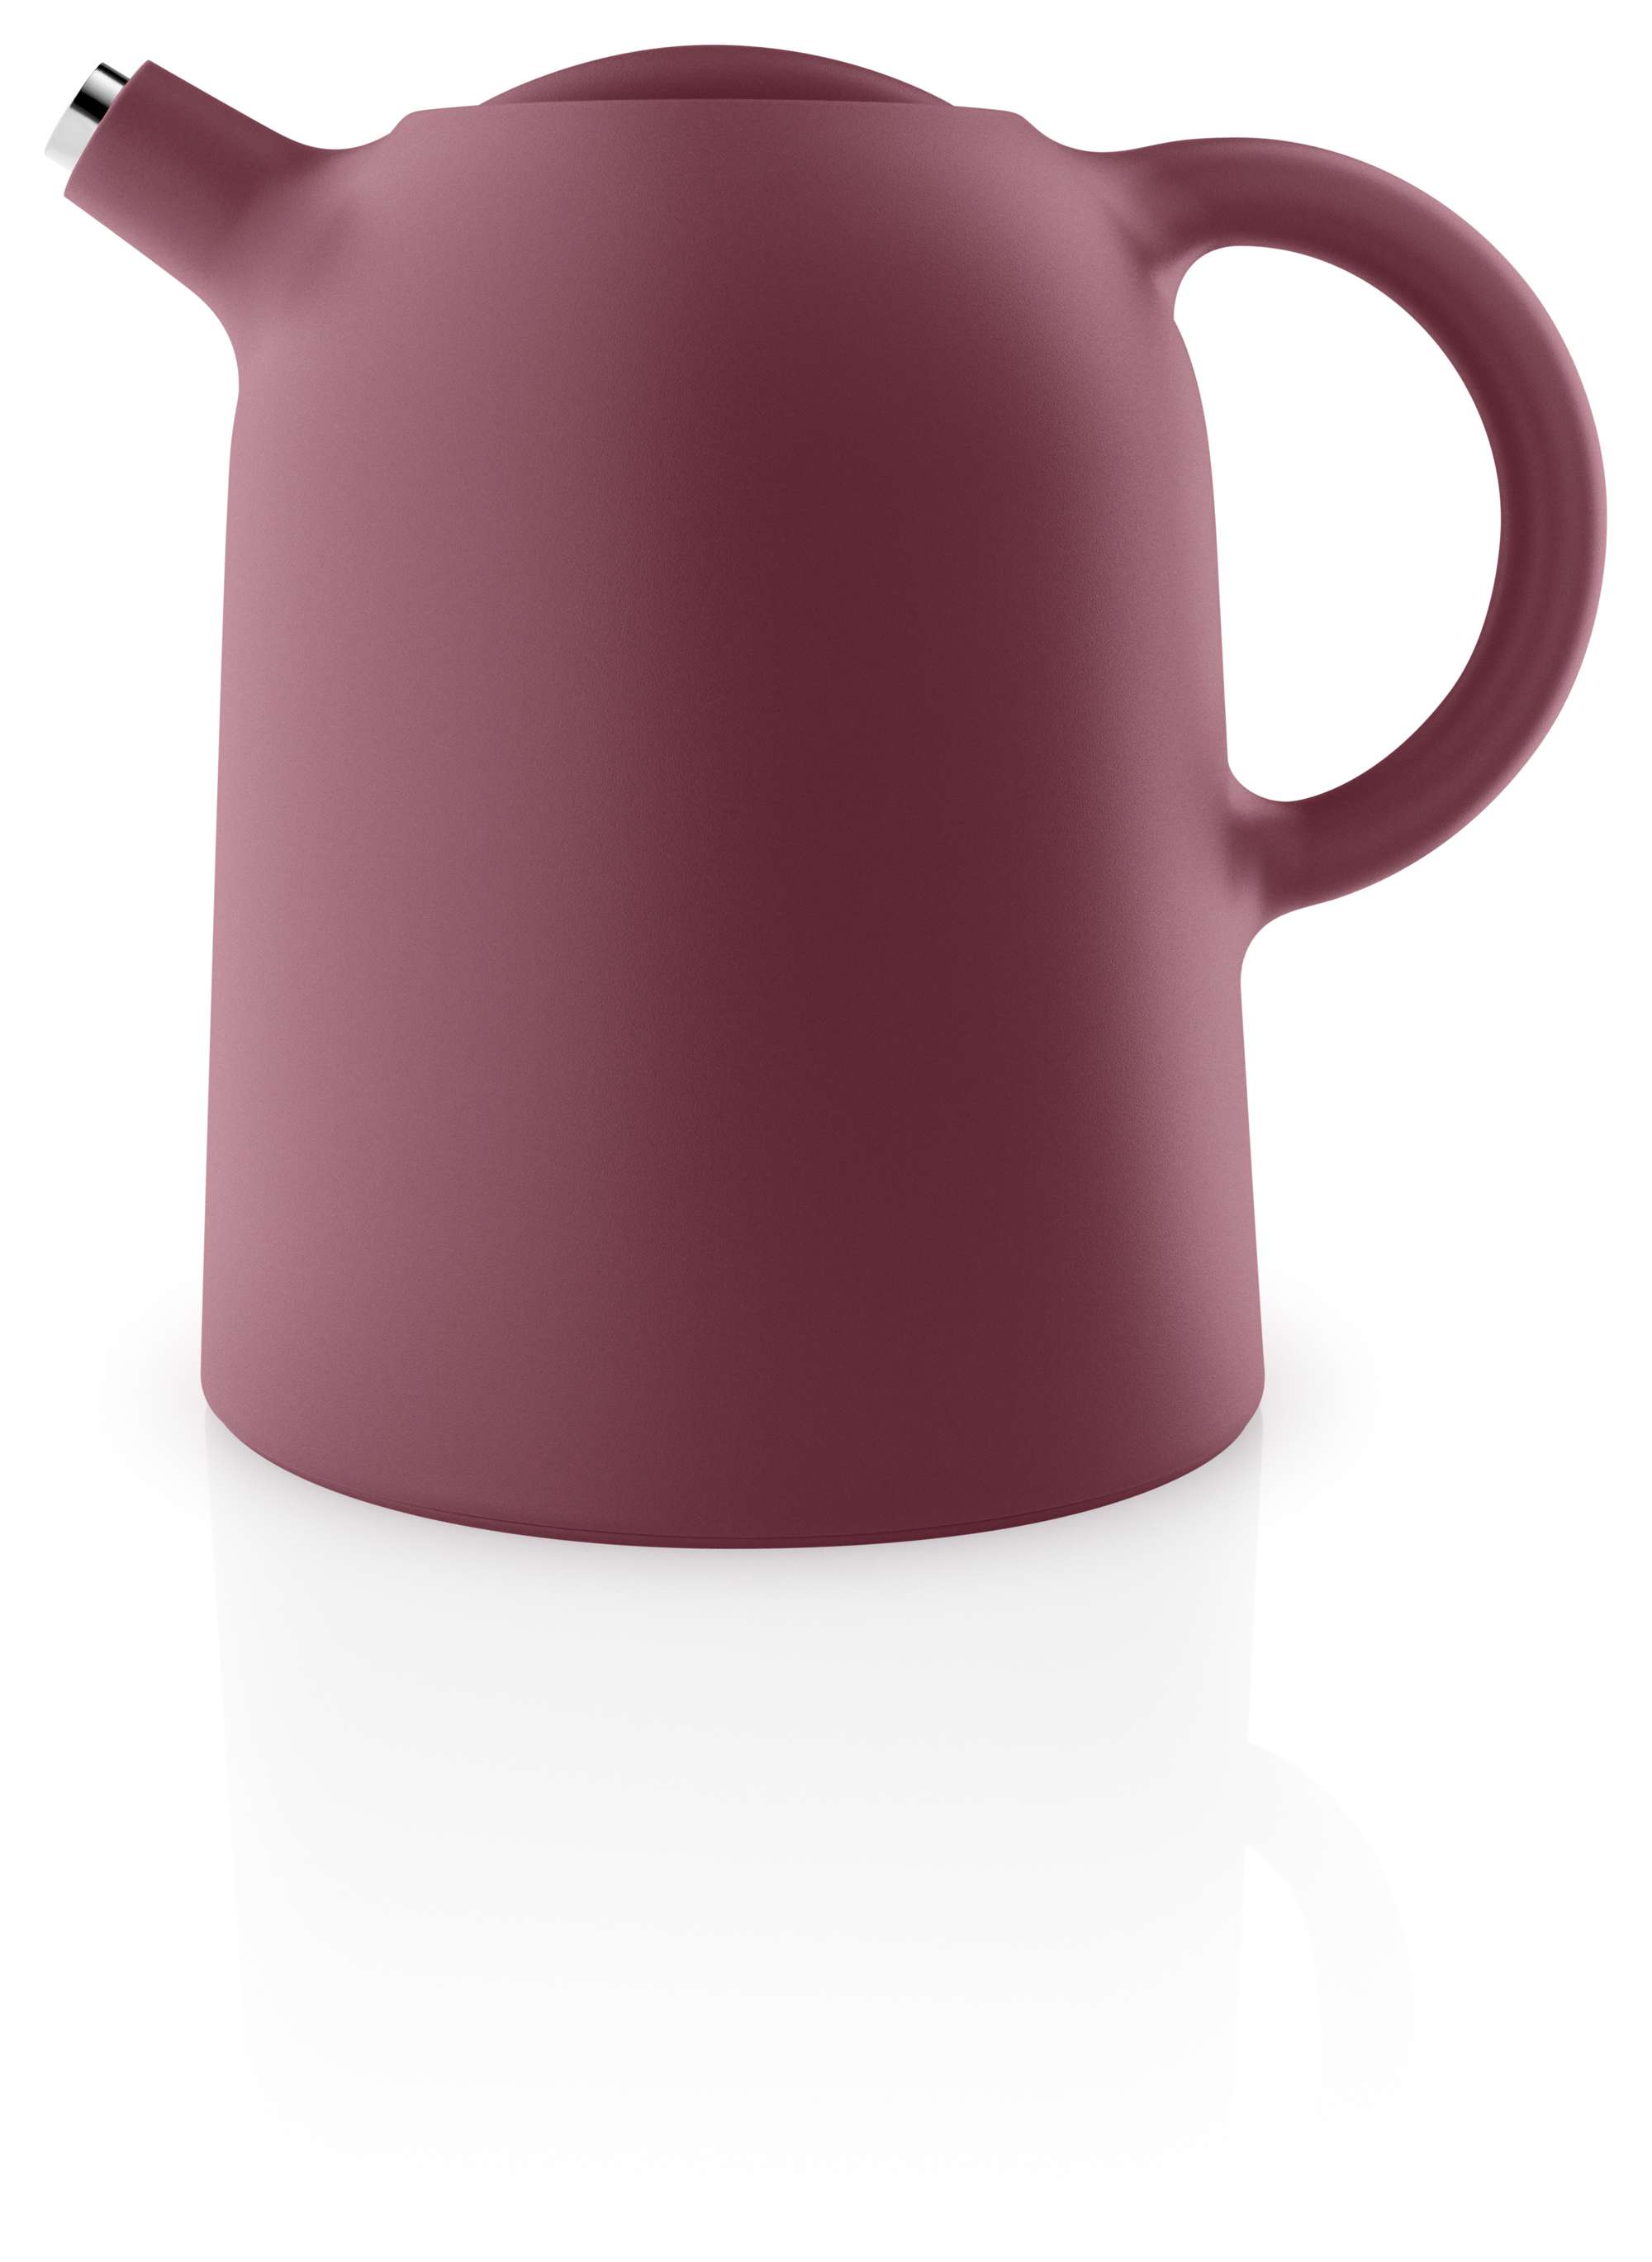 Thimble vacuum jug - 1 liter - Pomegranate